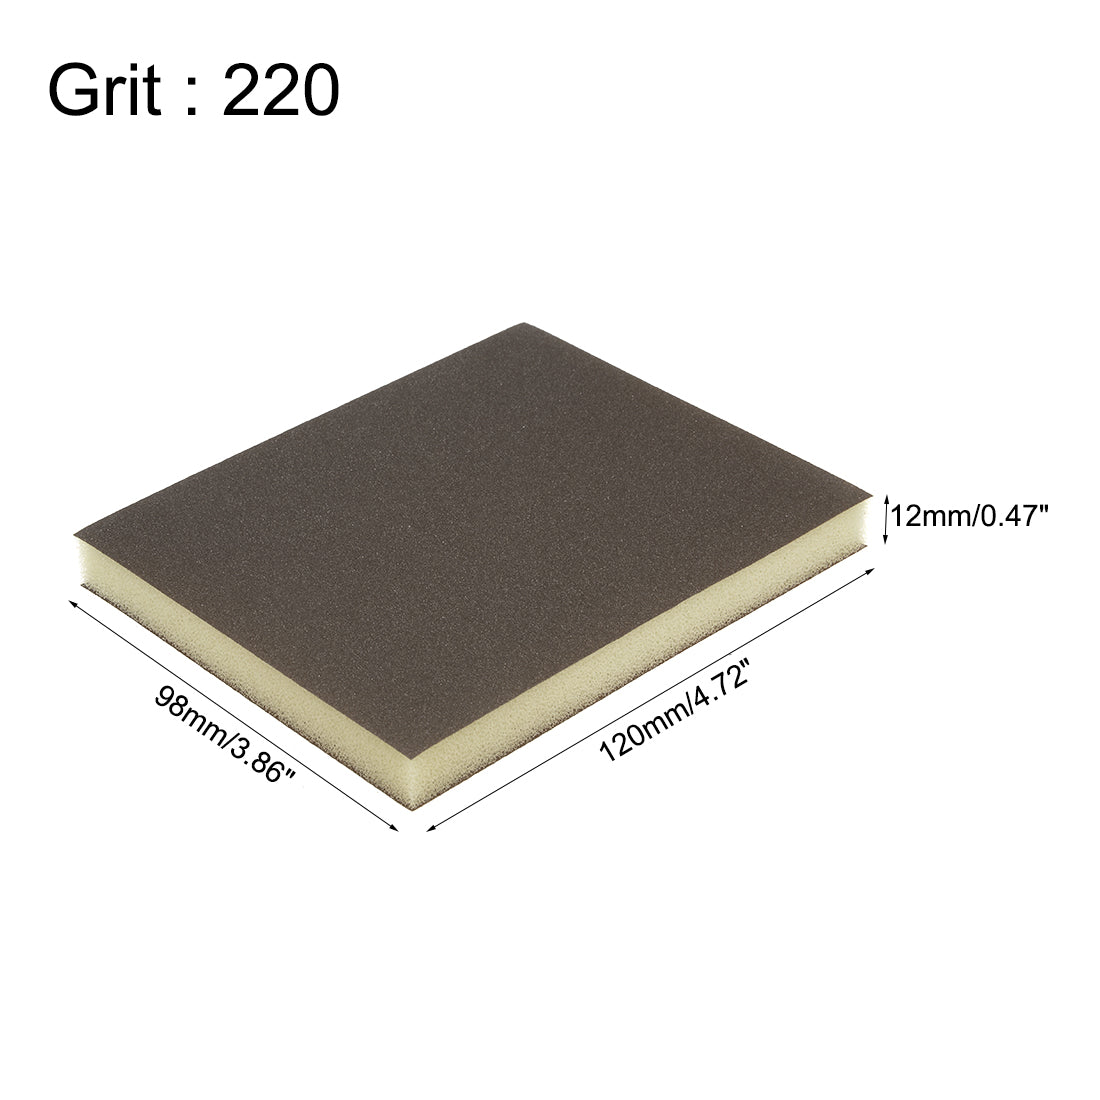 uxcell Uxcell Sanding Sponge, Medium Grit 220 Grit Sanding Block Pad, 4.72" x 3.86" x 0.47" Size 12pcs